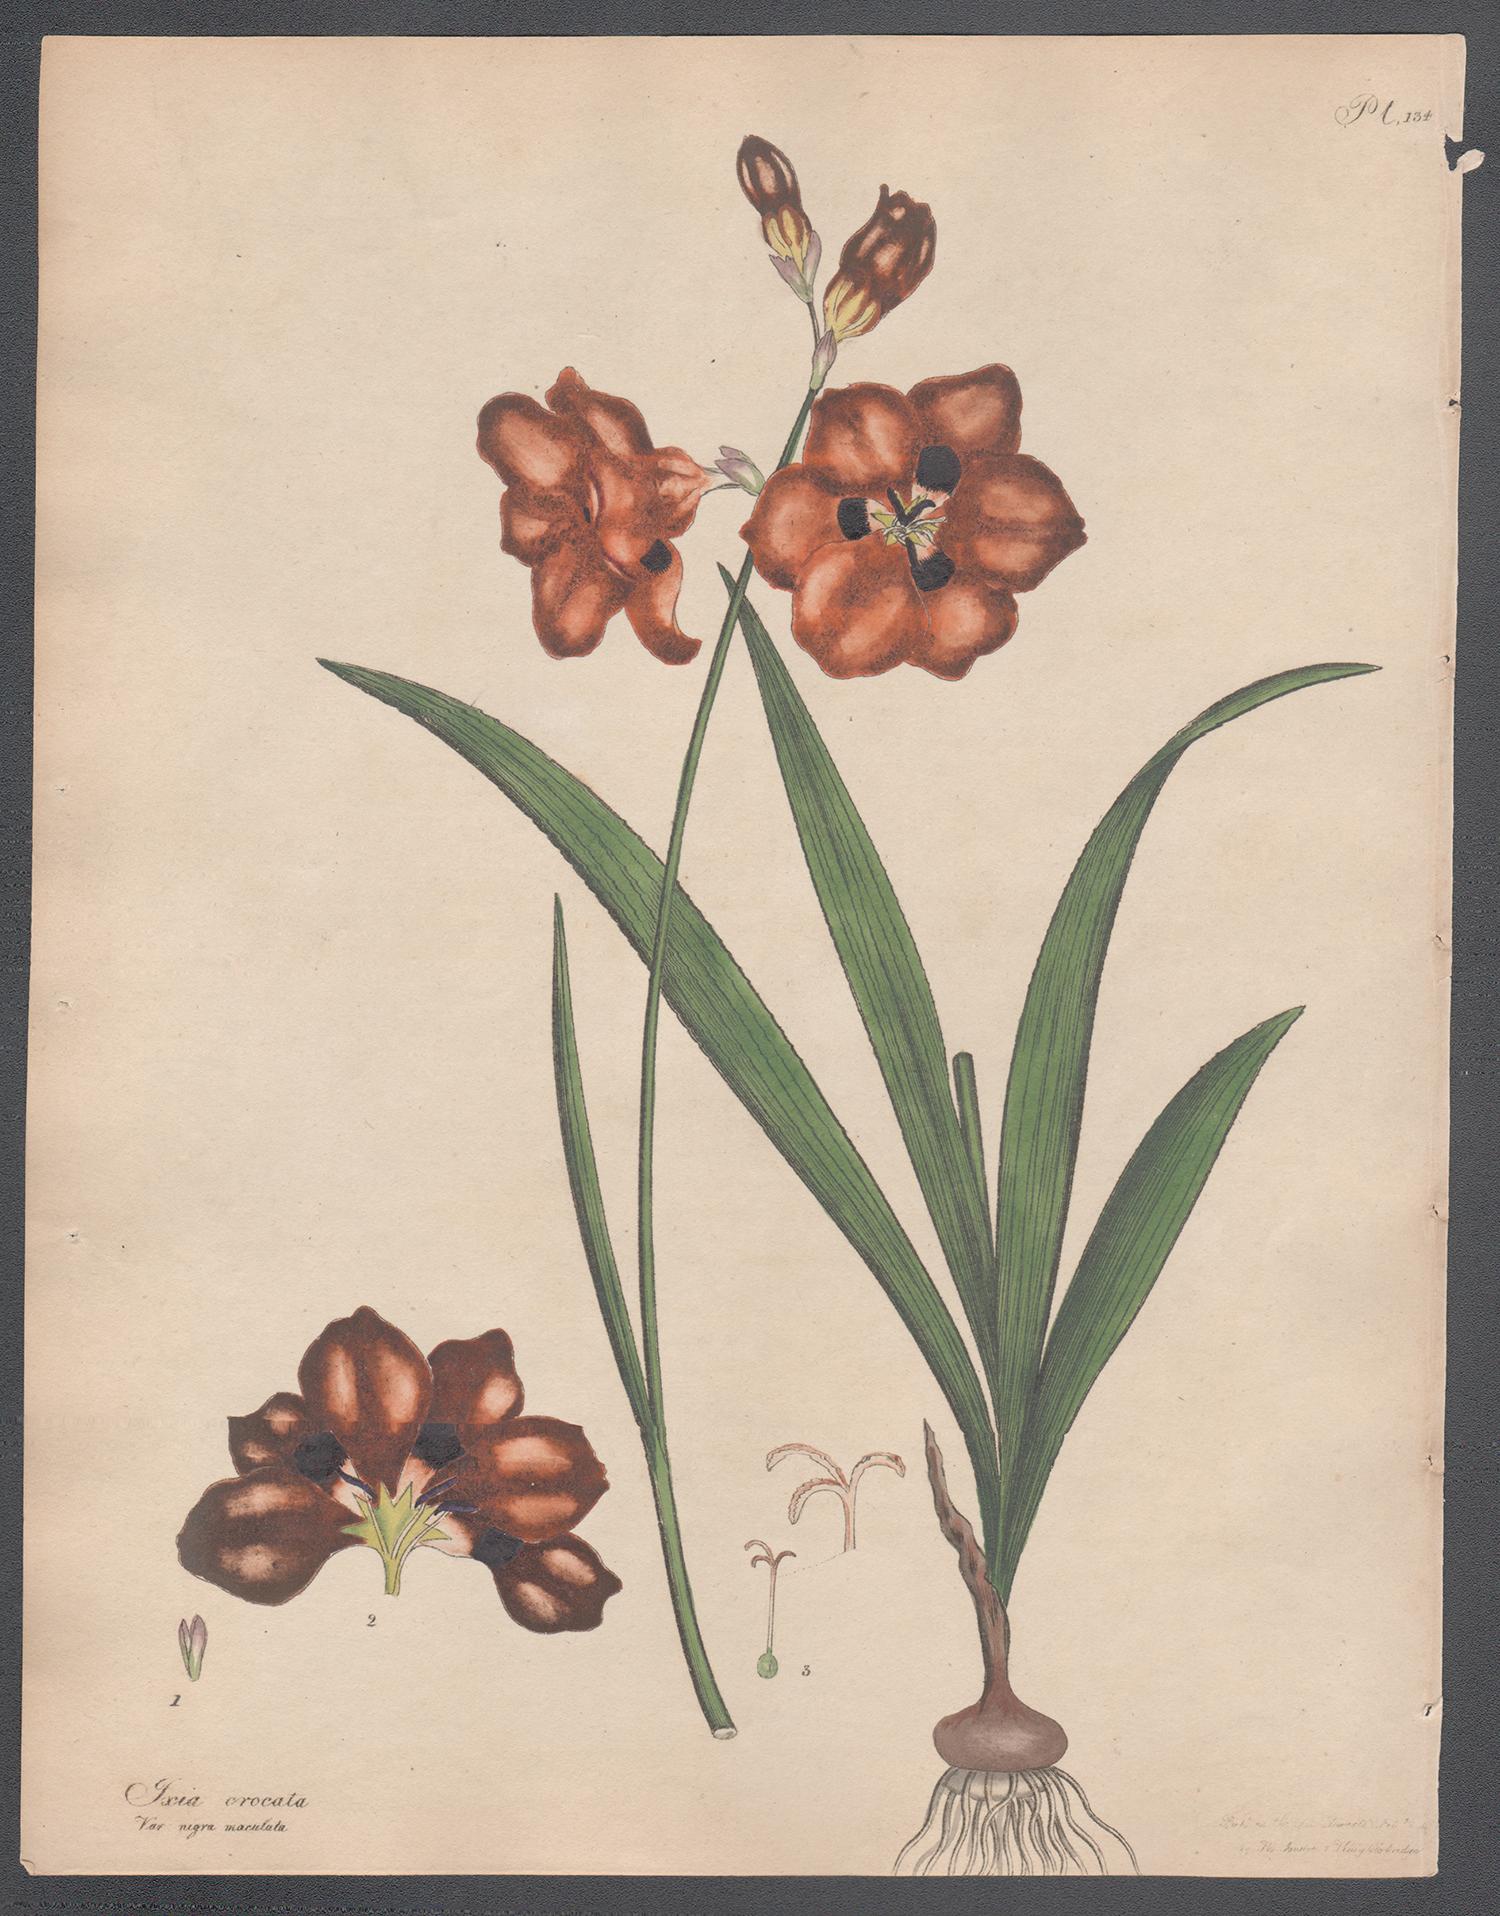 Henry C Andrews Still-Life Print - Ixia crocata -  Crocus-flowered Ixia, Andrews botanical engraving